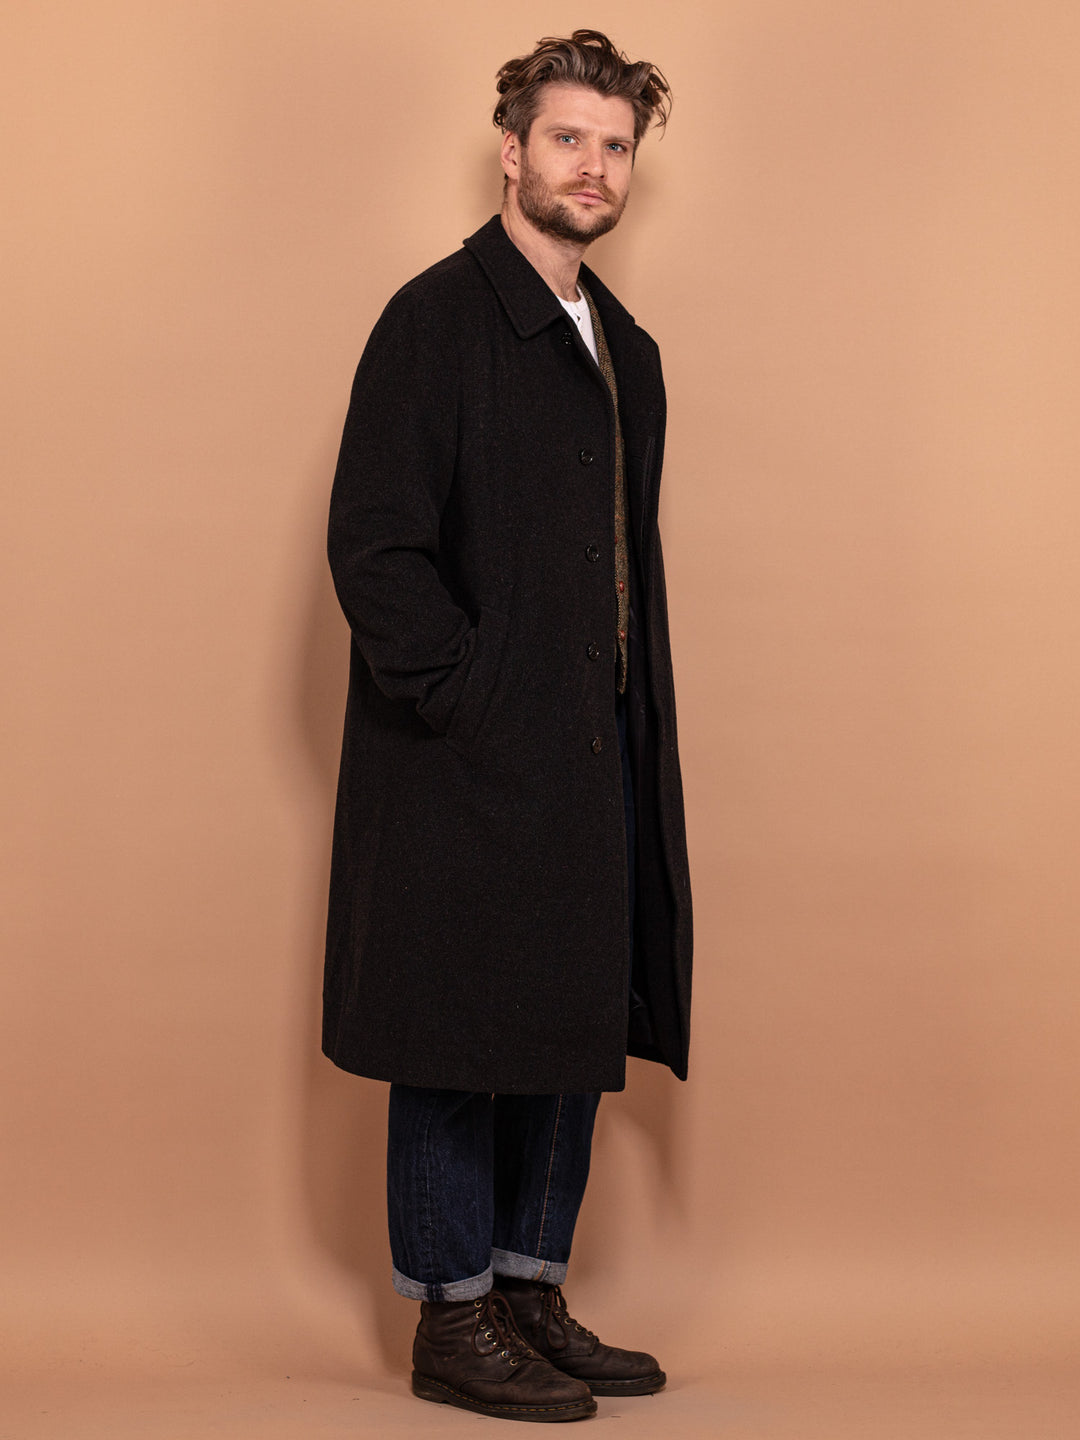 Wool and Cashmere Coat 90's, Size L Large, Men Vintage Overcoat, Dark Gray Wool Blend Coat, Minimalist Style Elegant Outerwear, Menswear